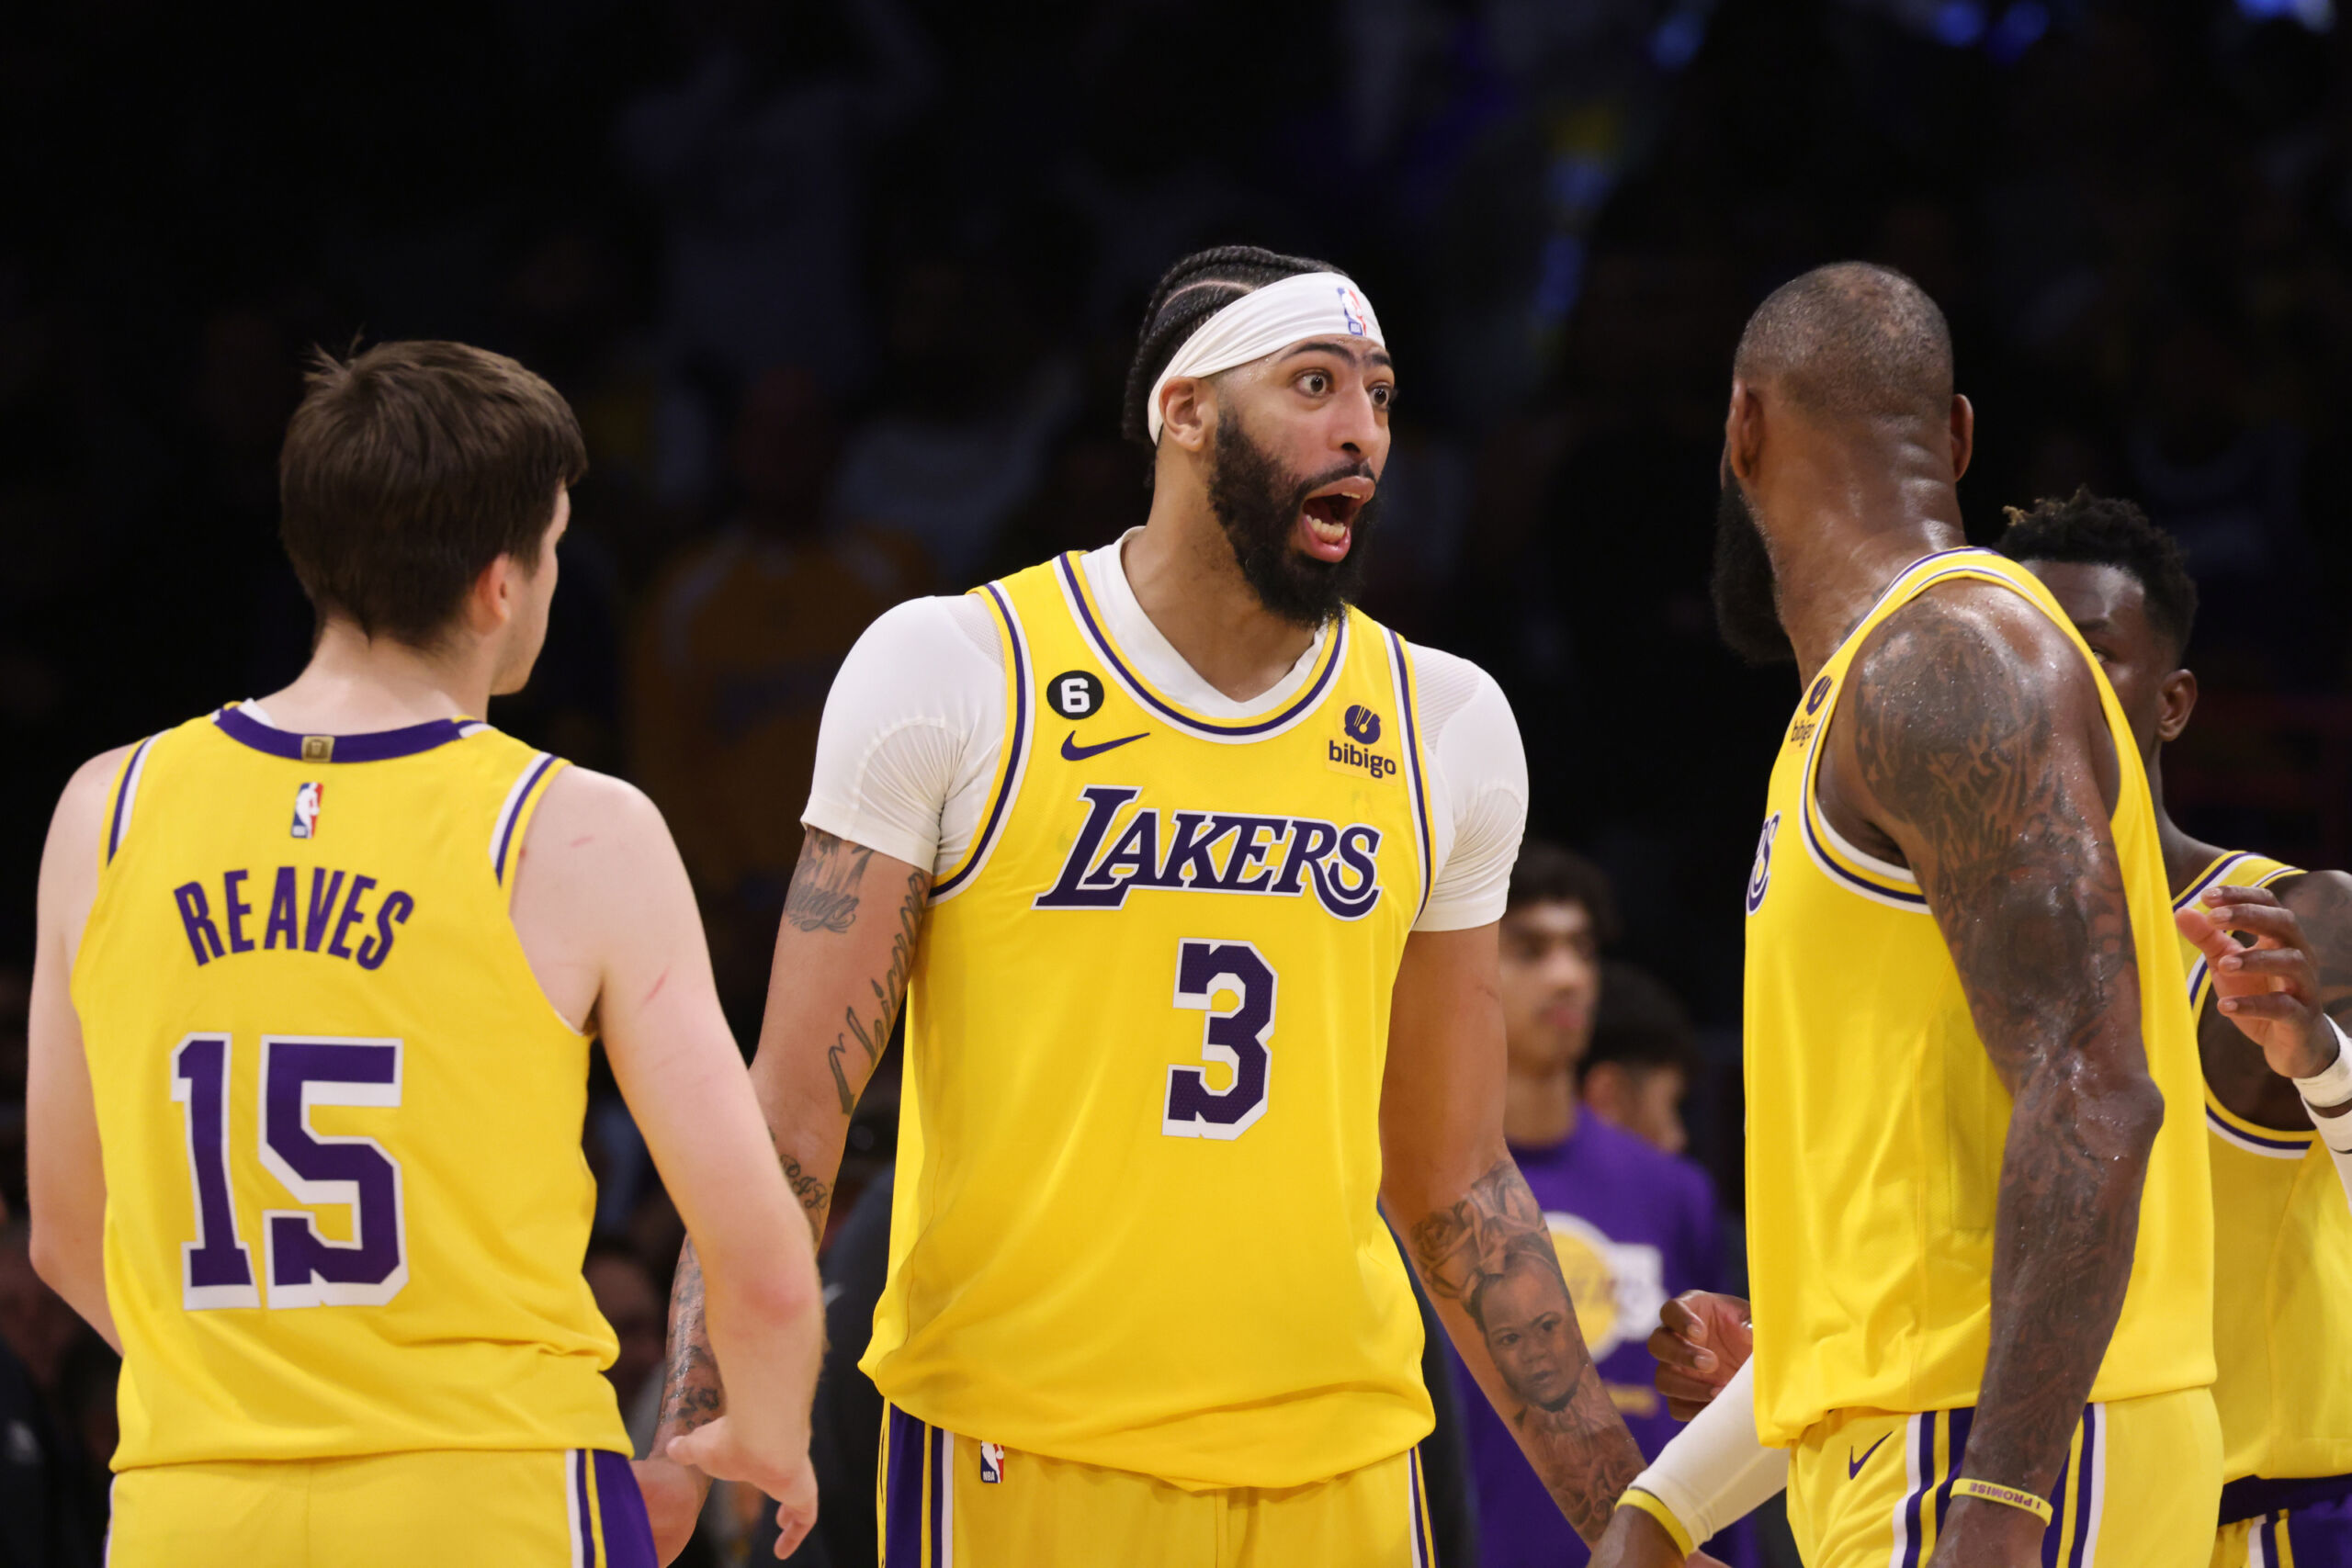 Photos: Lakers vs Nets (1/25/22) Photo Gallery